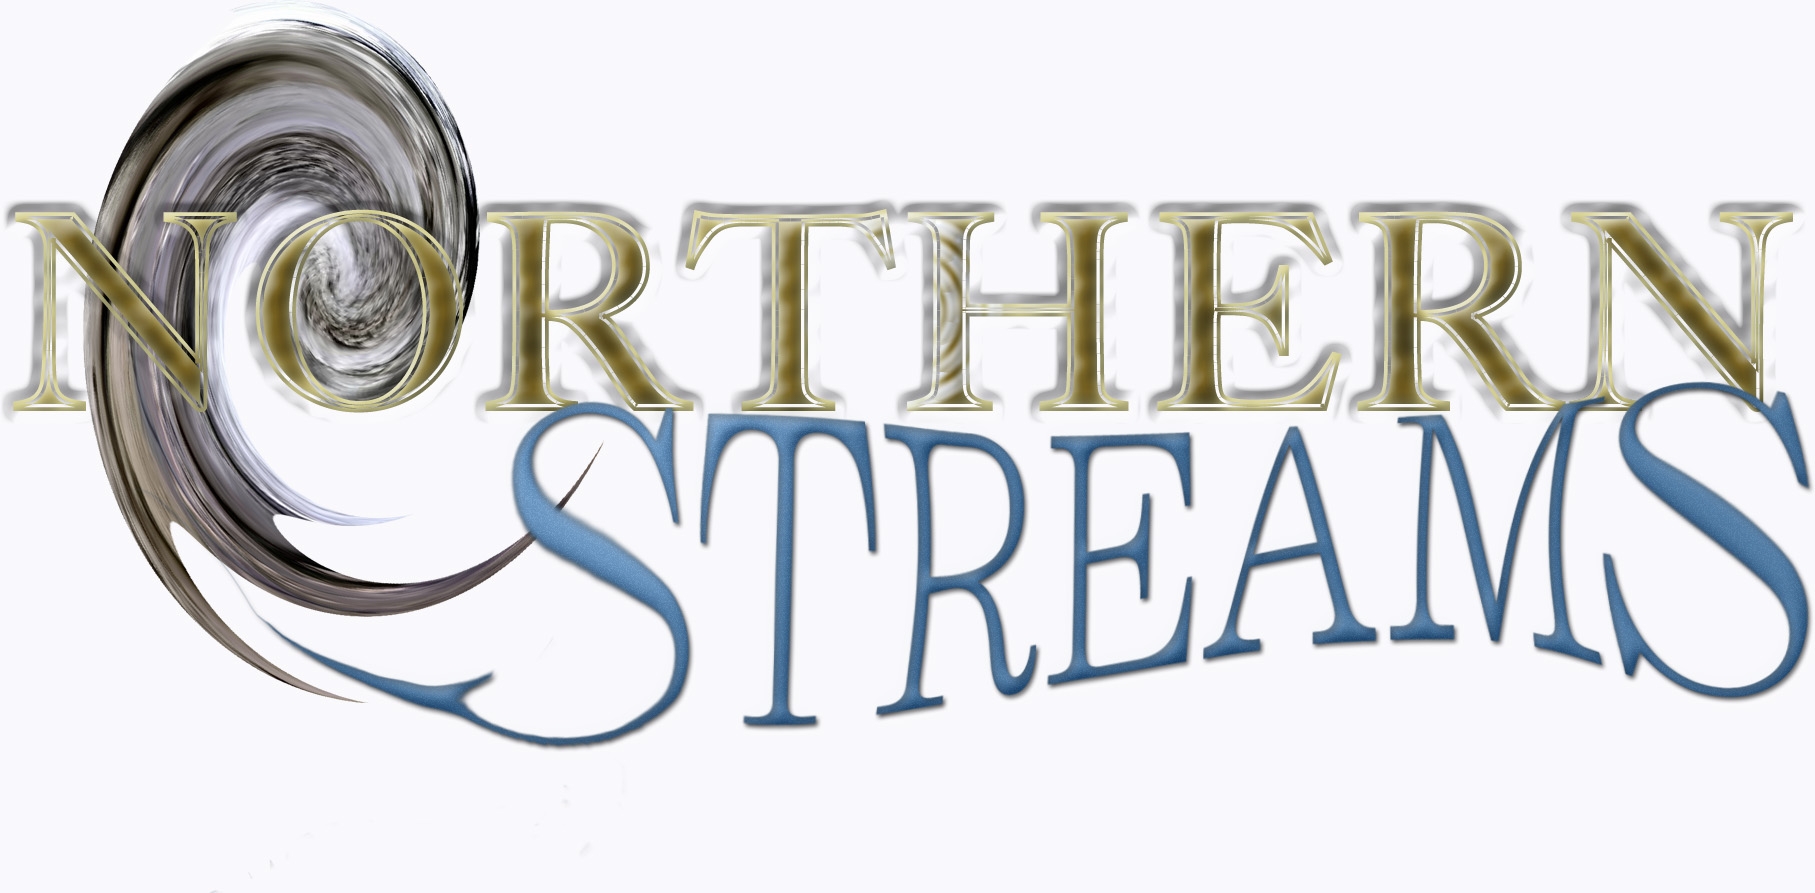 Northern Streams logo on white.JPG